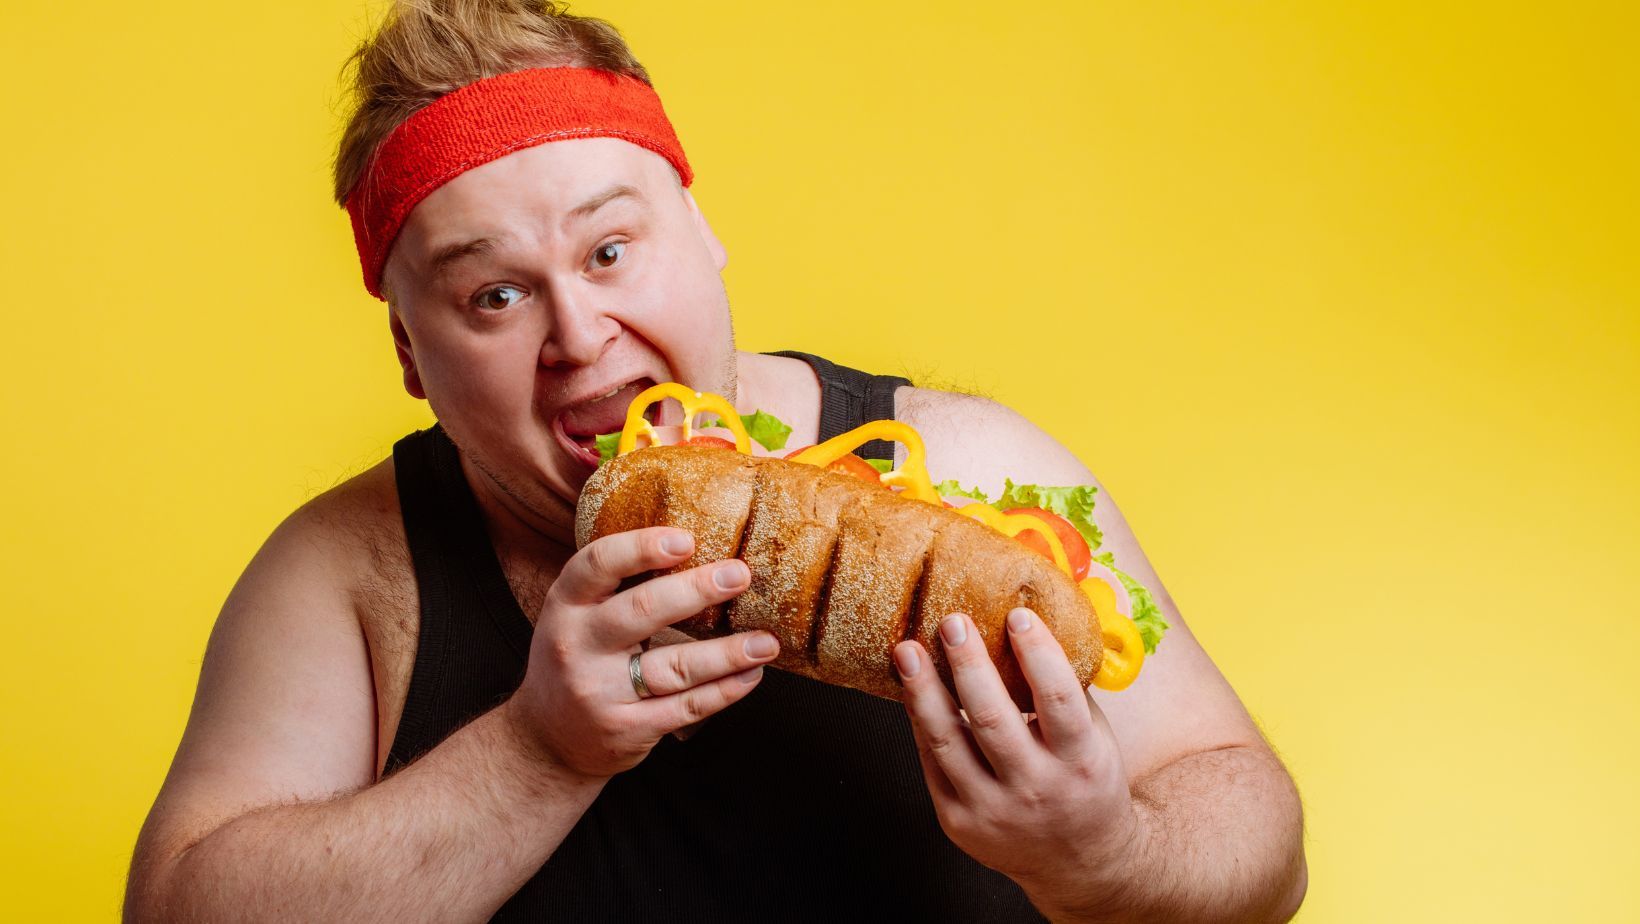 A fat man eating Subway foods.